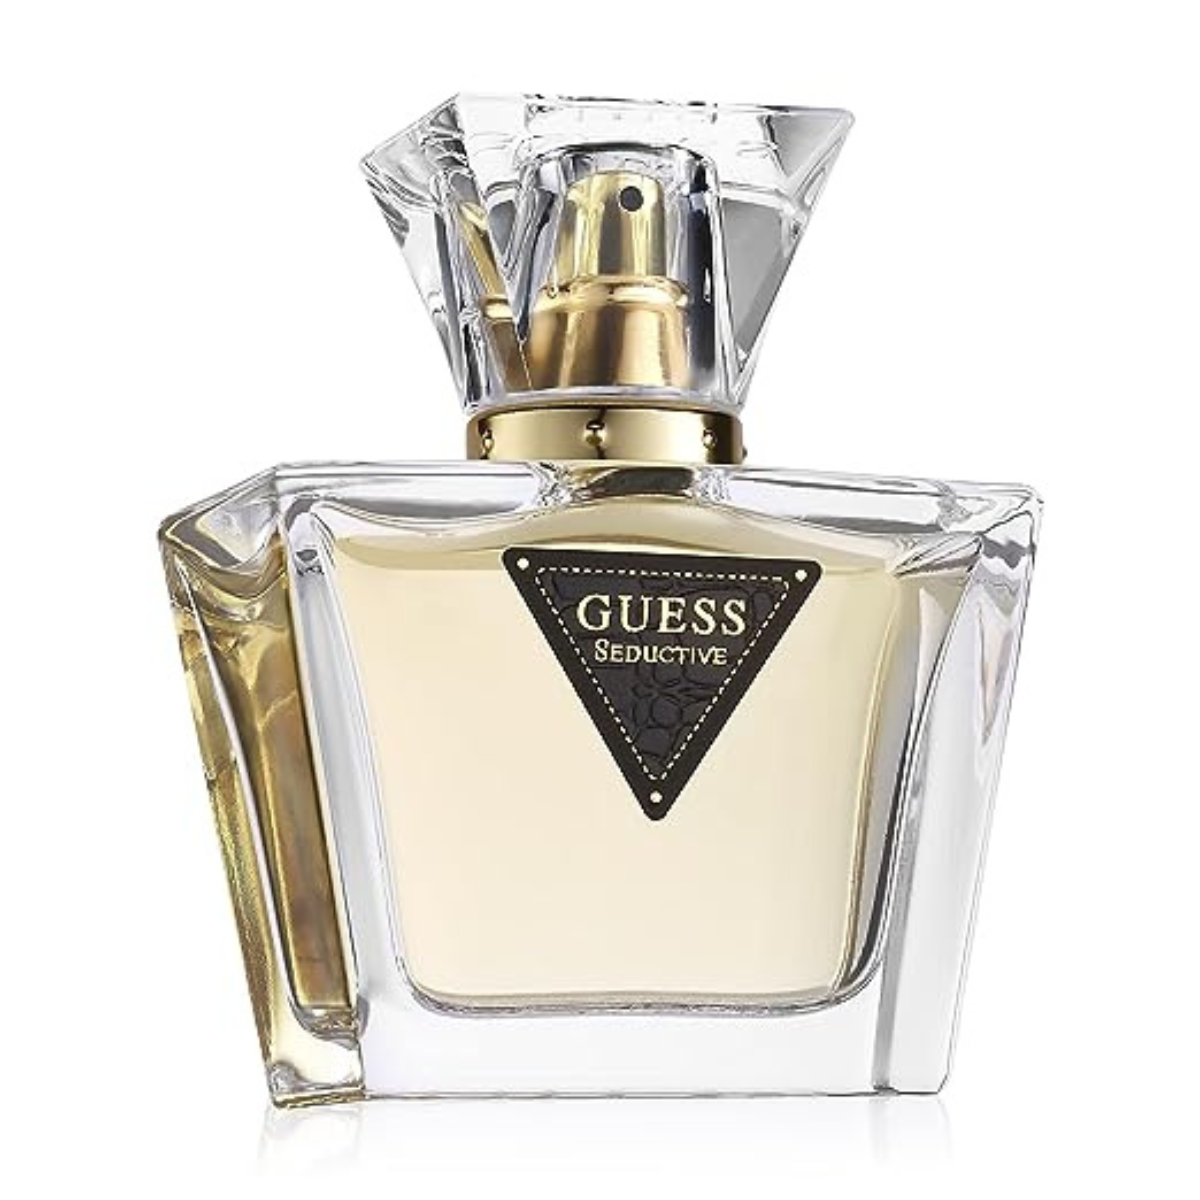 Guess seductive 75 ml for women perfume